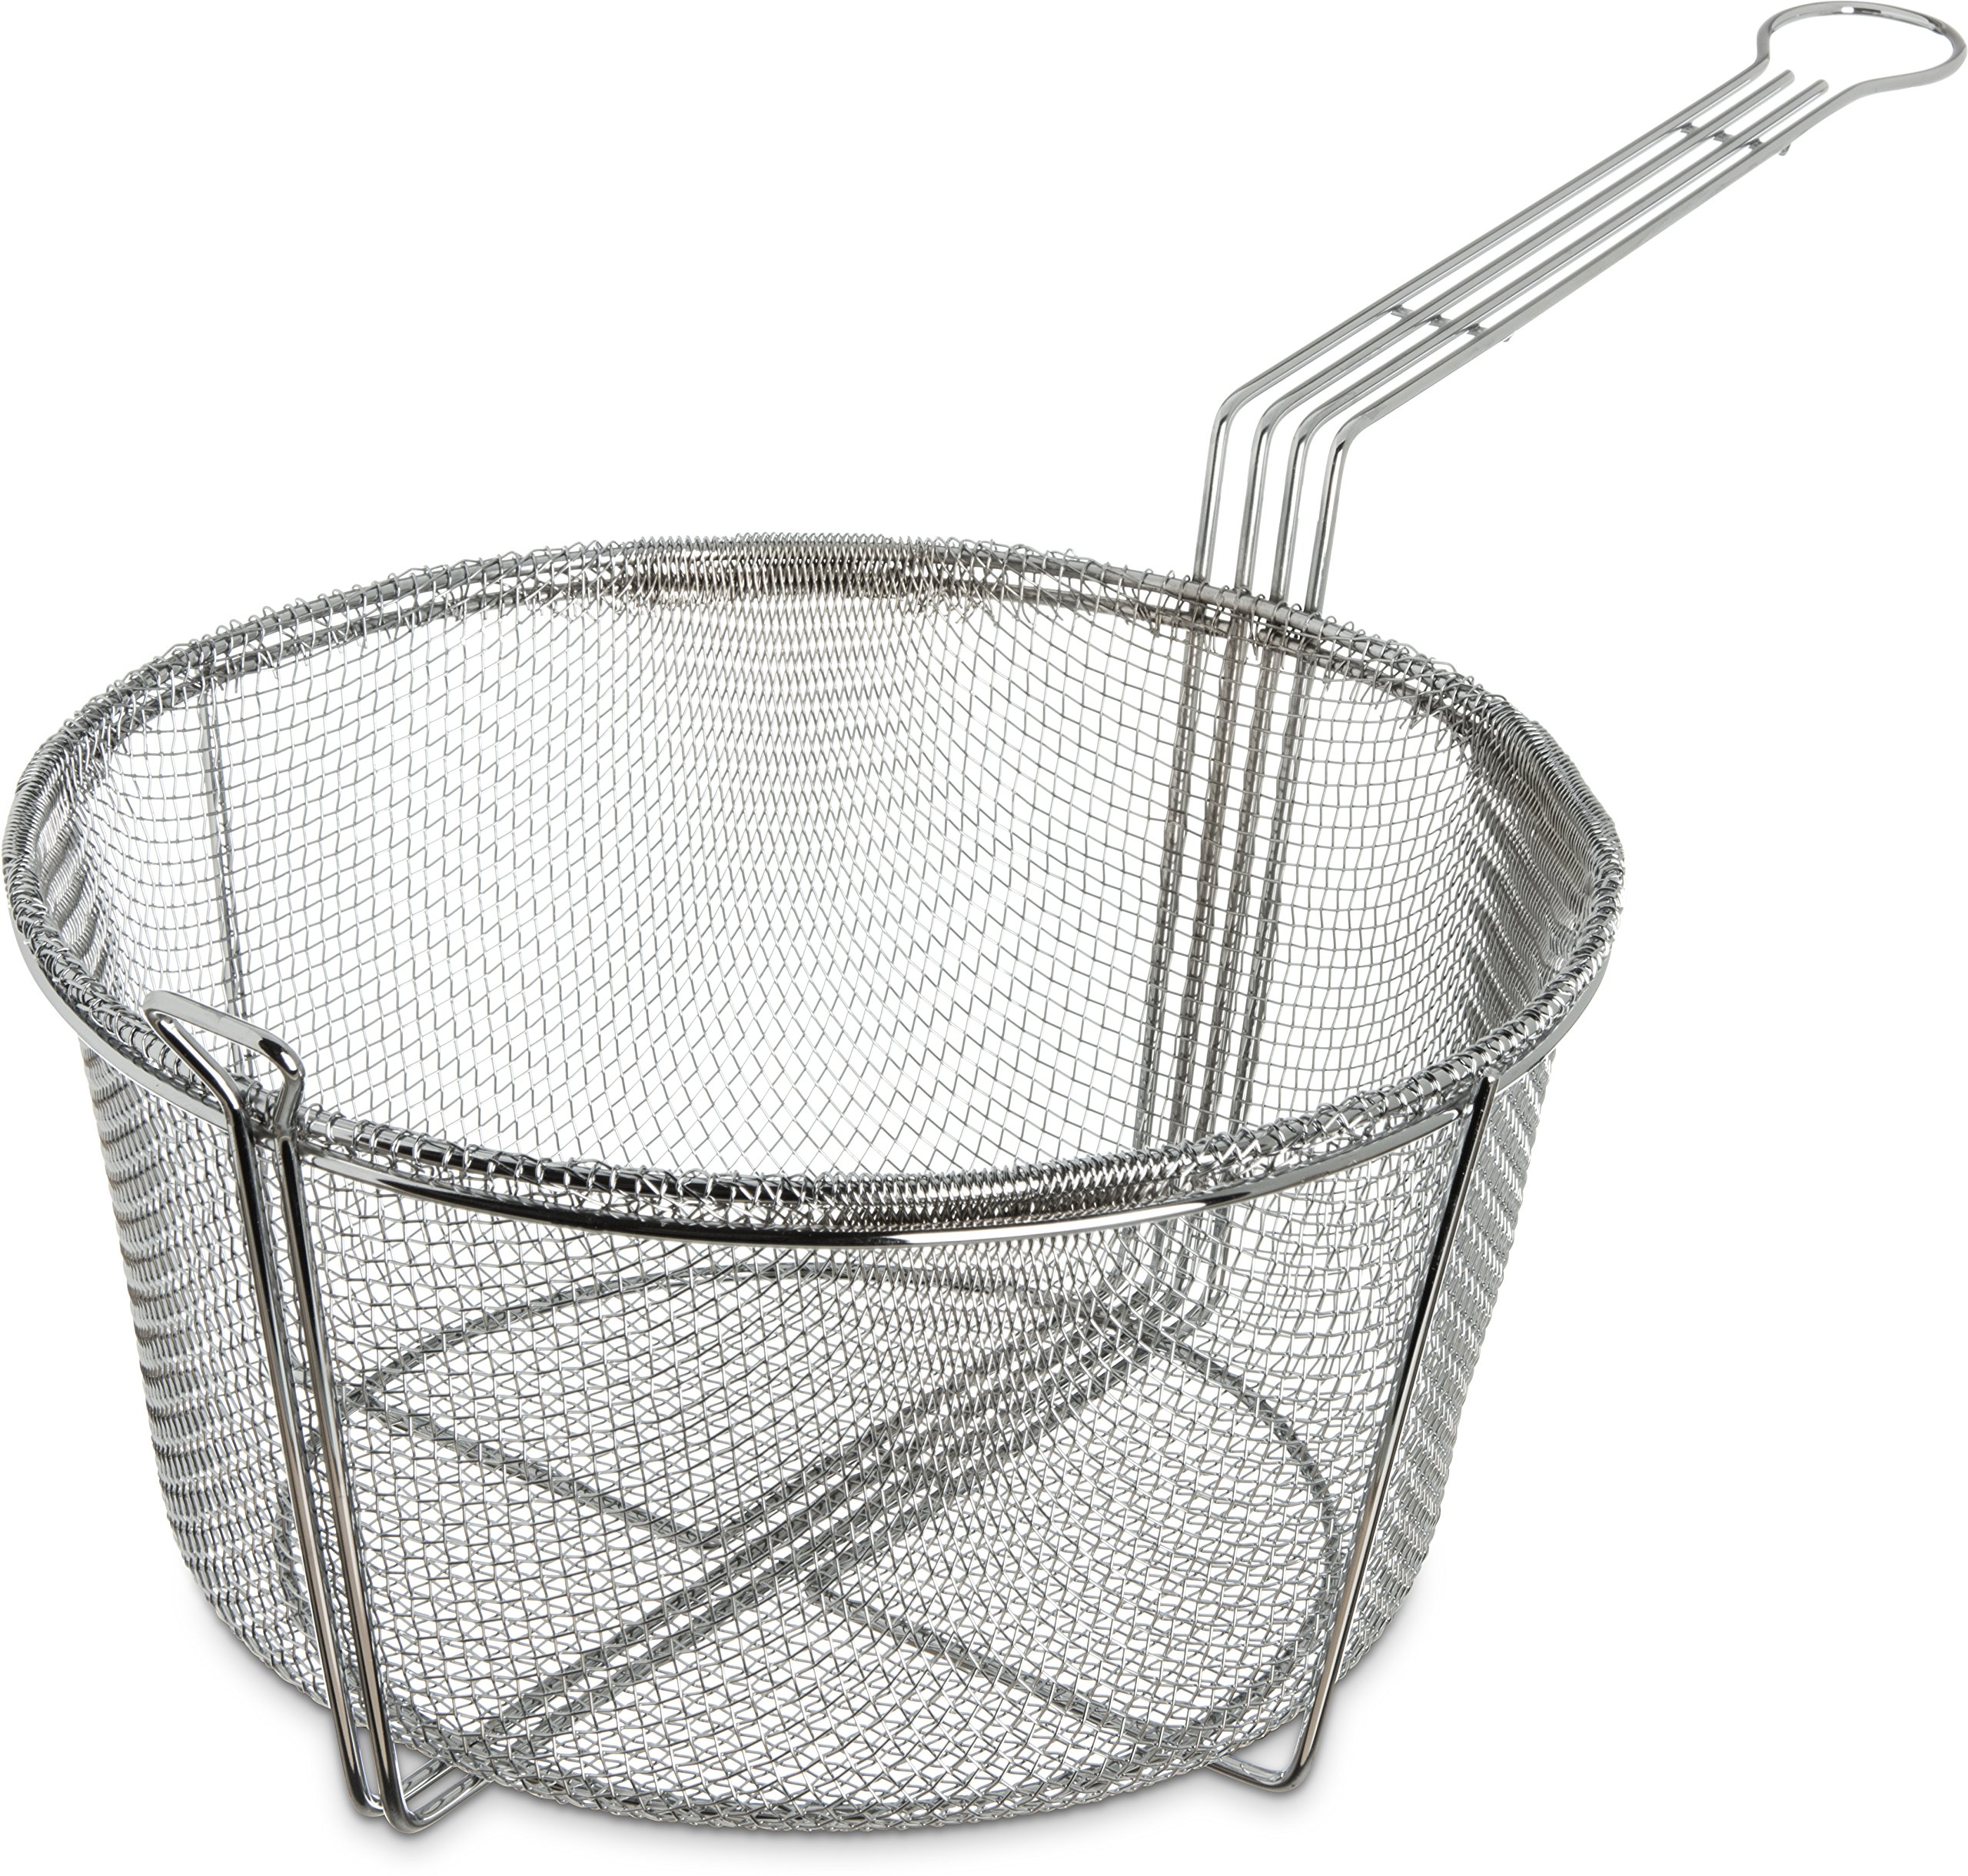 Carlisle FoodService Products 601002 Chrome Plated Nickel Steel Mesh Fryer Basket, 11-1/2